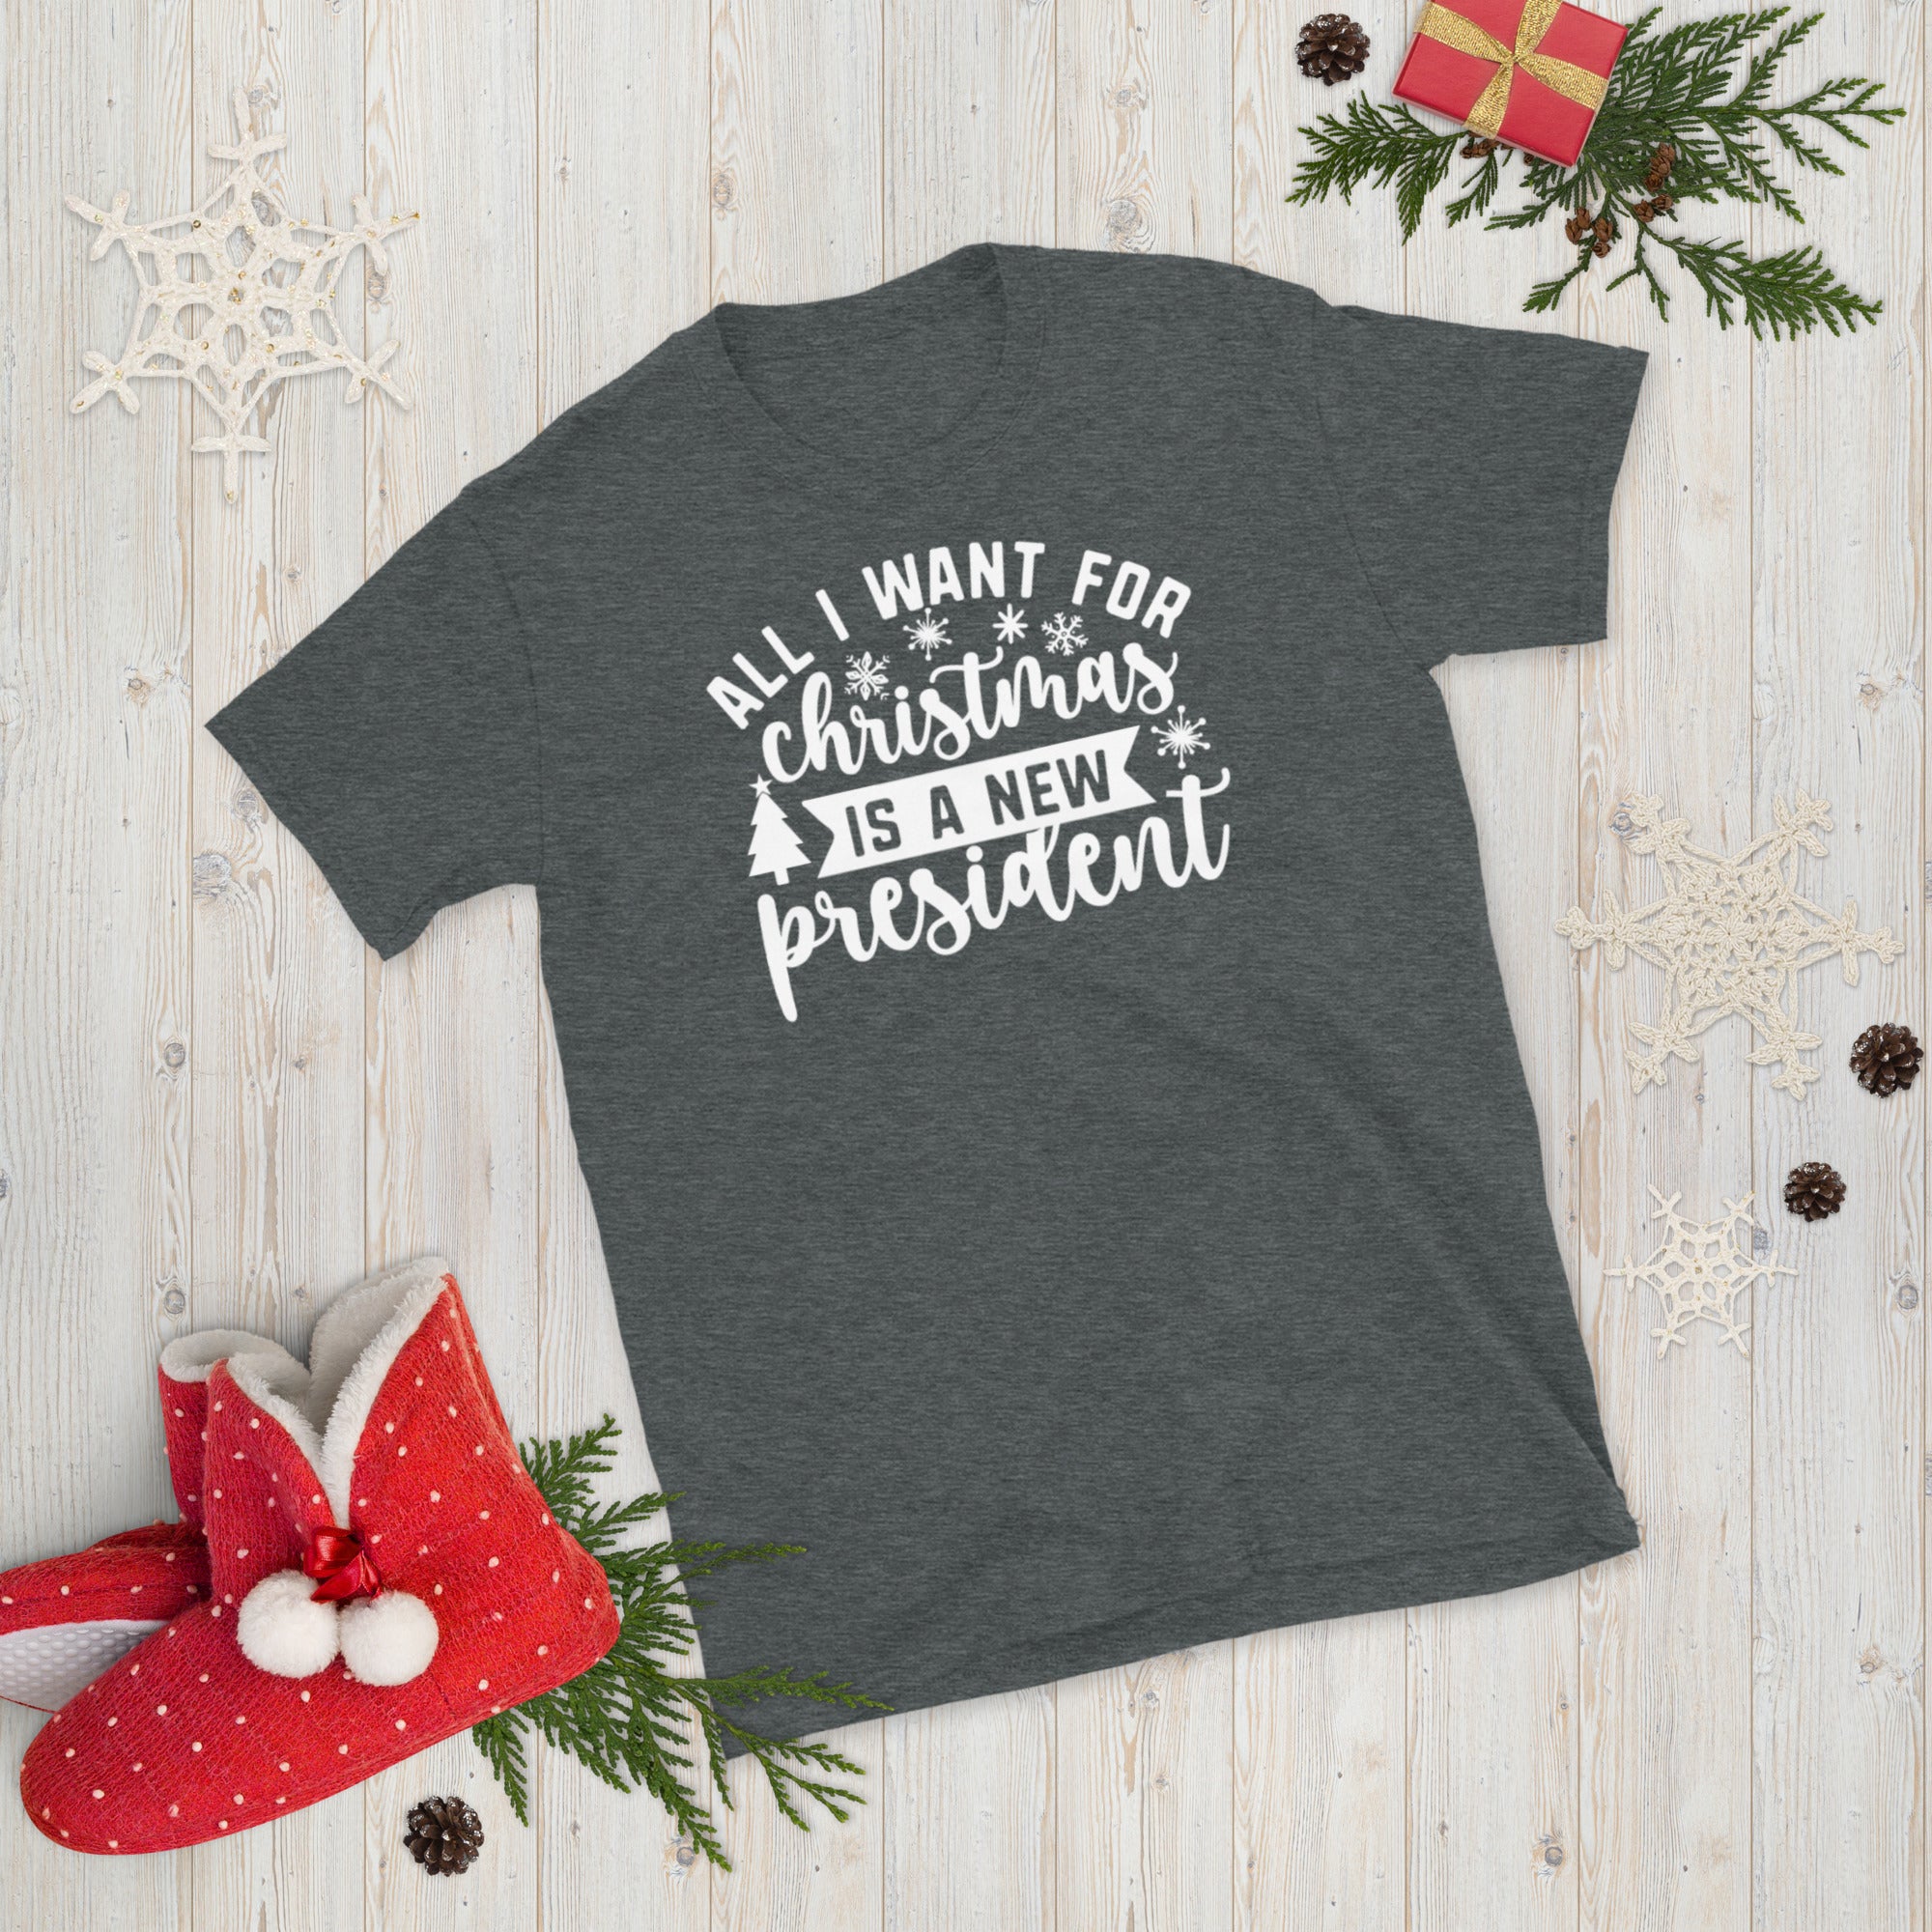 All I Want For Christmas Is A New President, FJB Christmas Shirt, Christmas Gifts, Anti Biden Gift, Christmas Pajamas, FJB Xmas Shirt - Madeinsea©